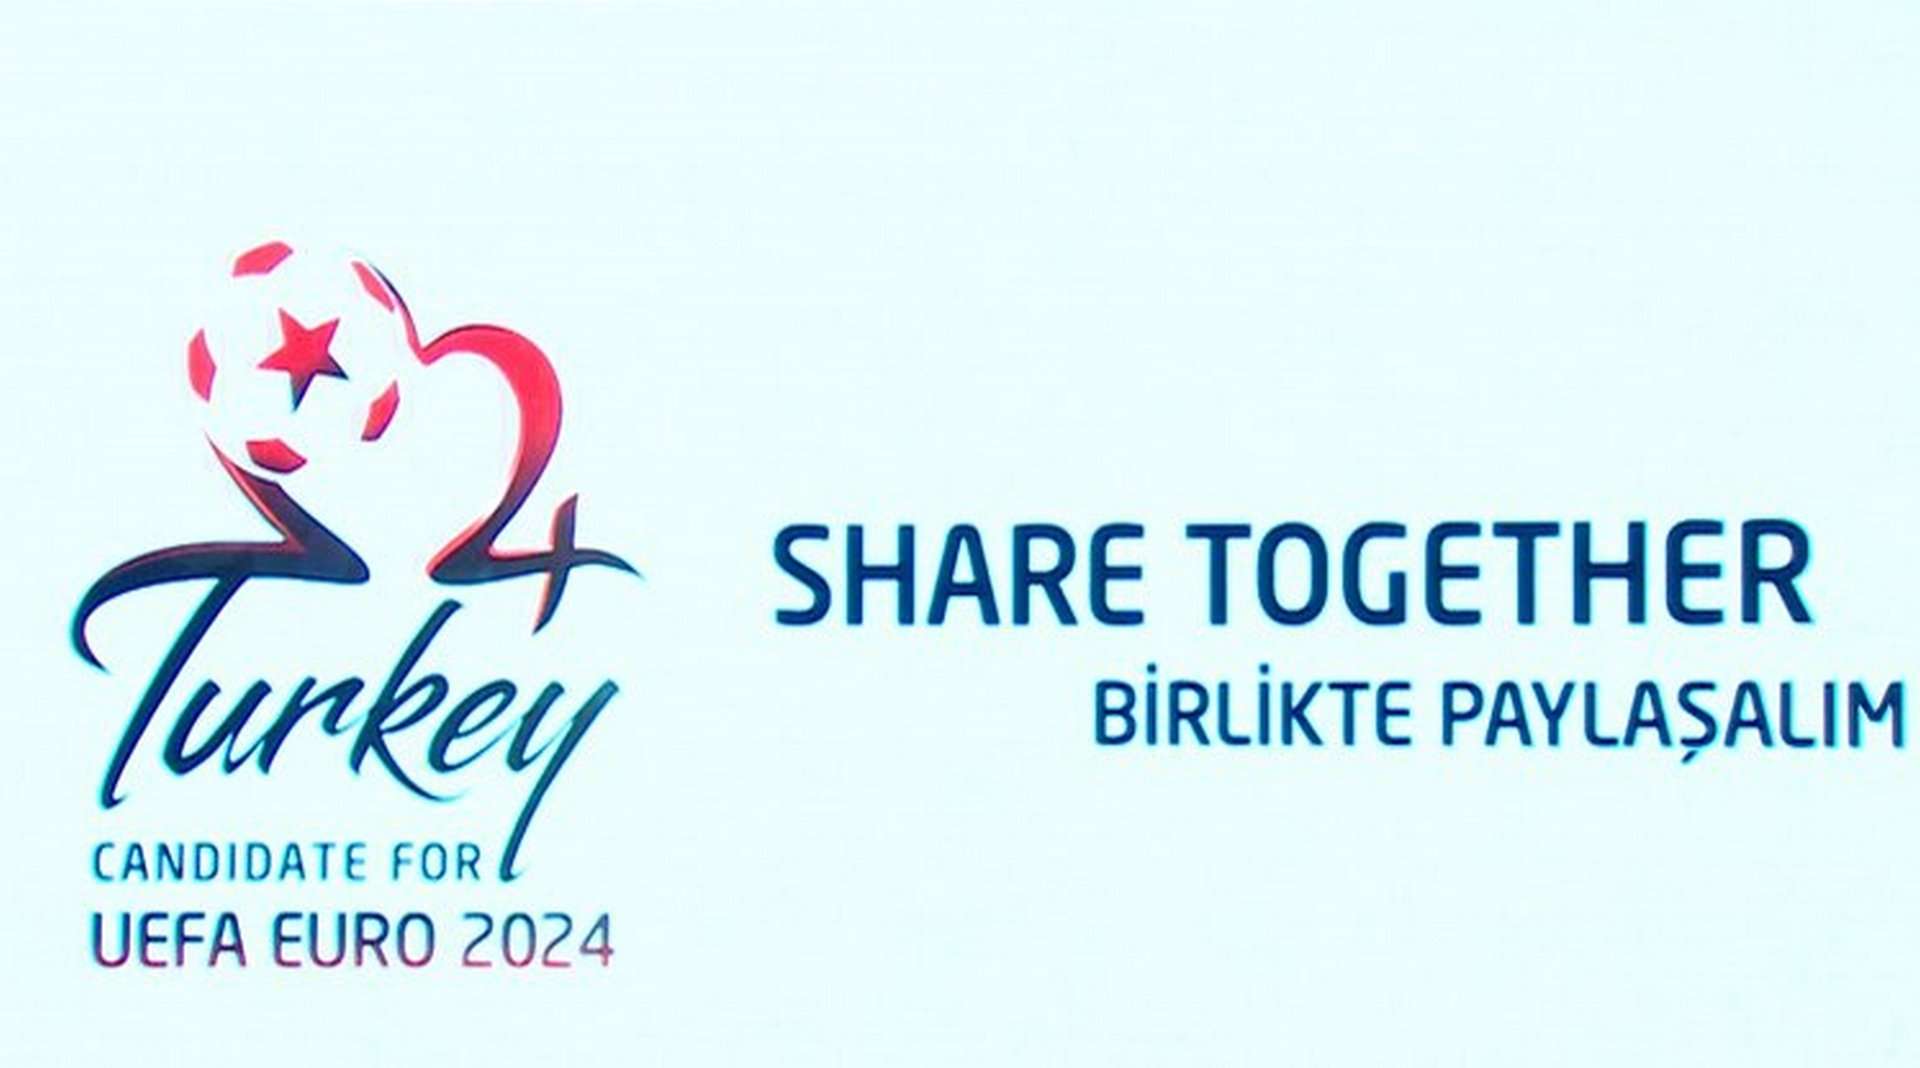 EURO 2024 Turkey logo (Candidate)